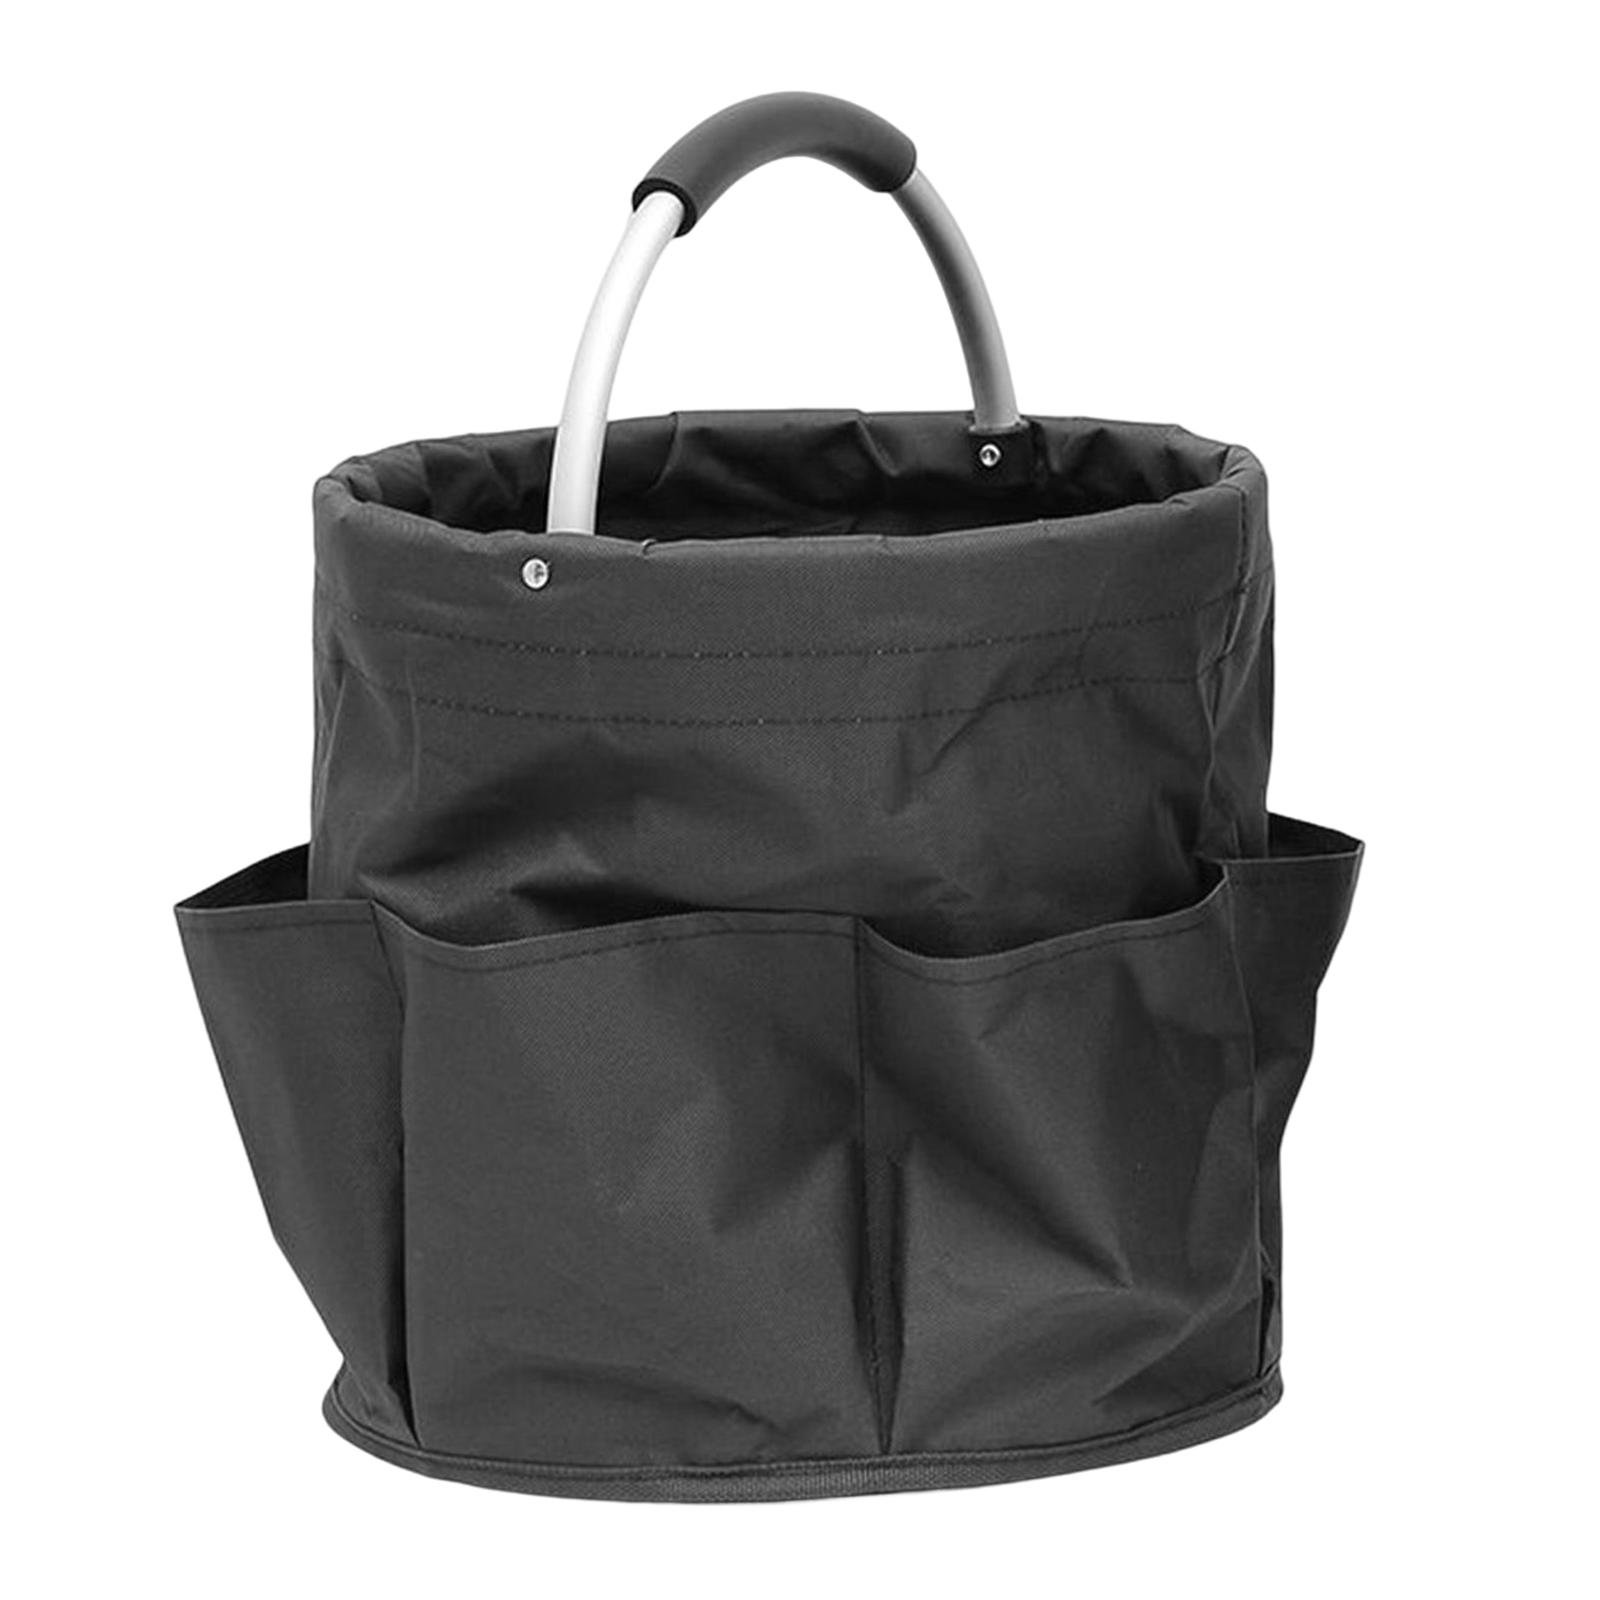 Camping Picnic Basket Space Saving Scratch Resistant Market Basket Bag Picnic Hamper for Hiking Gardening Day Trip Theme Park